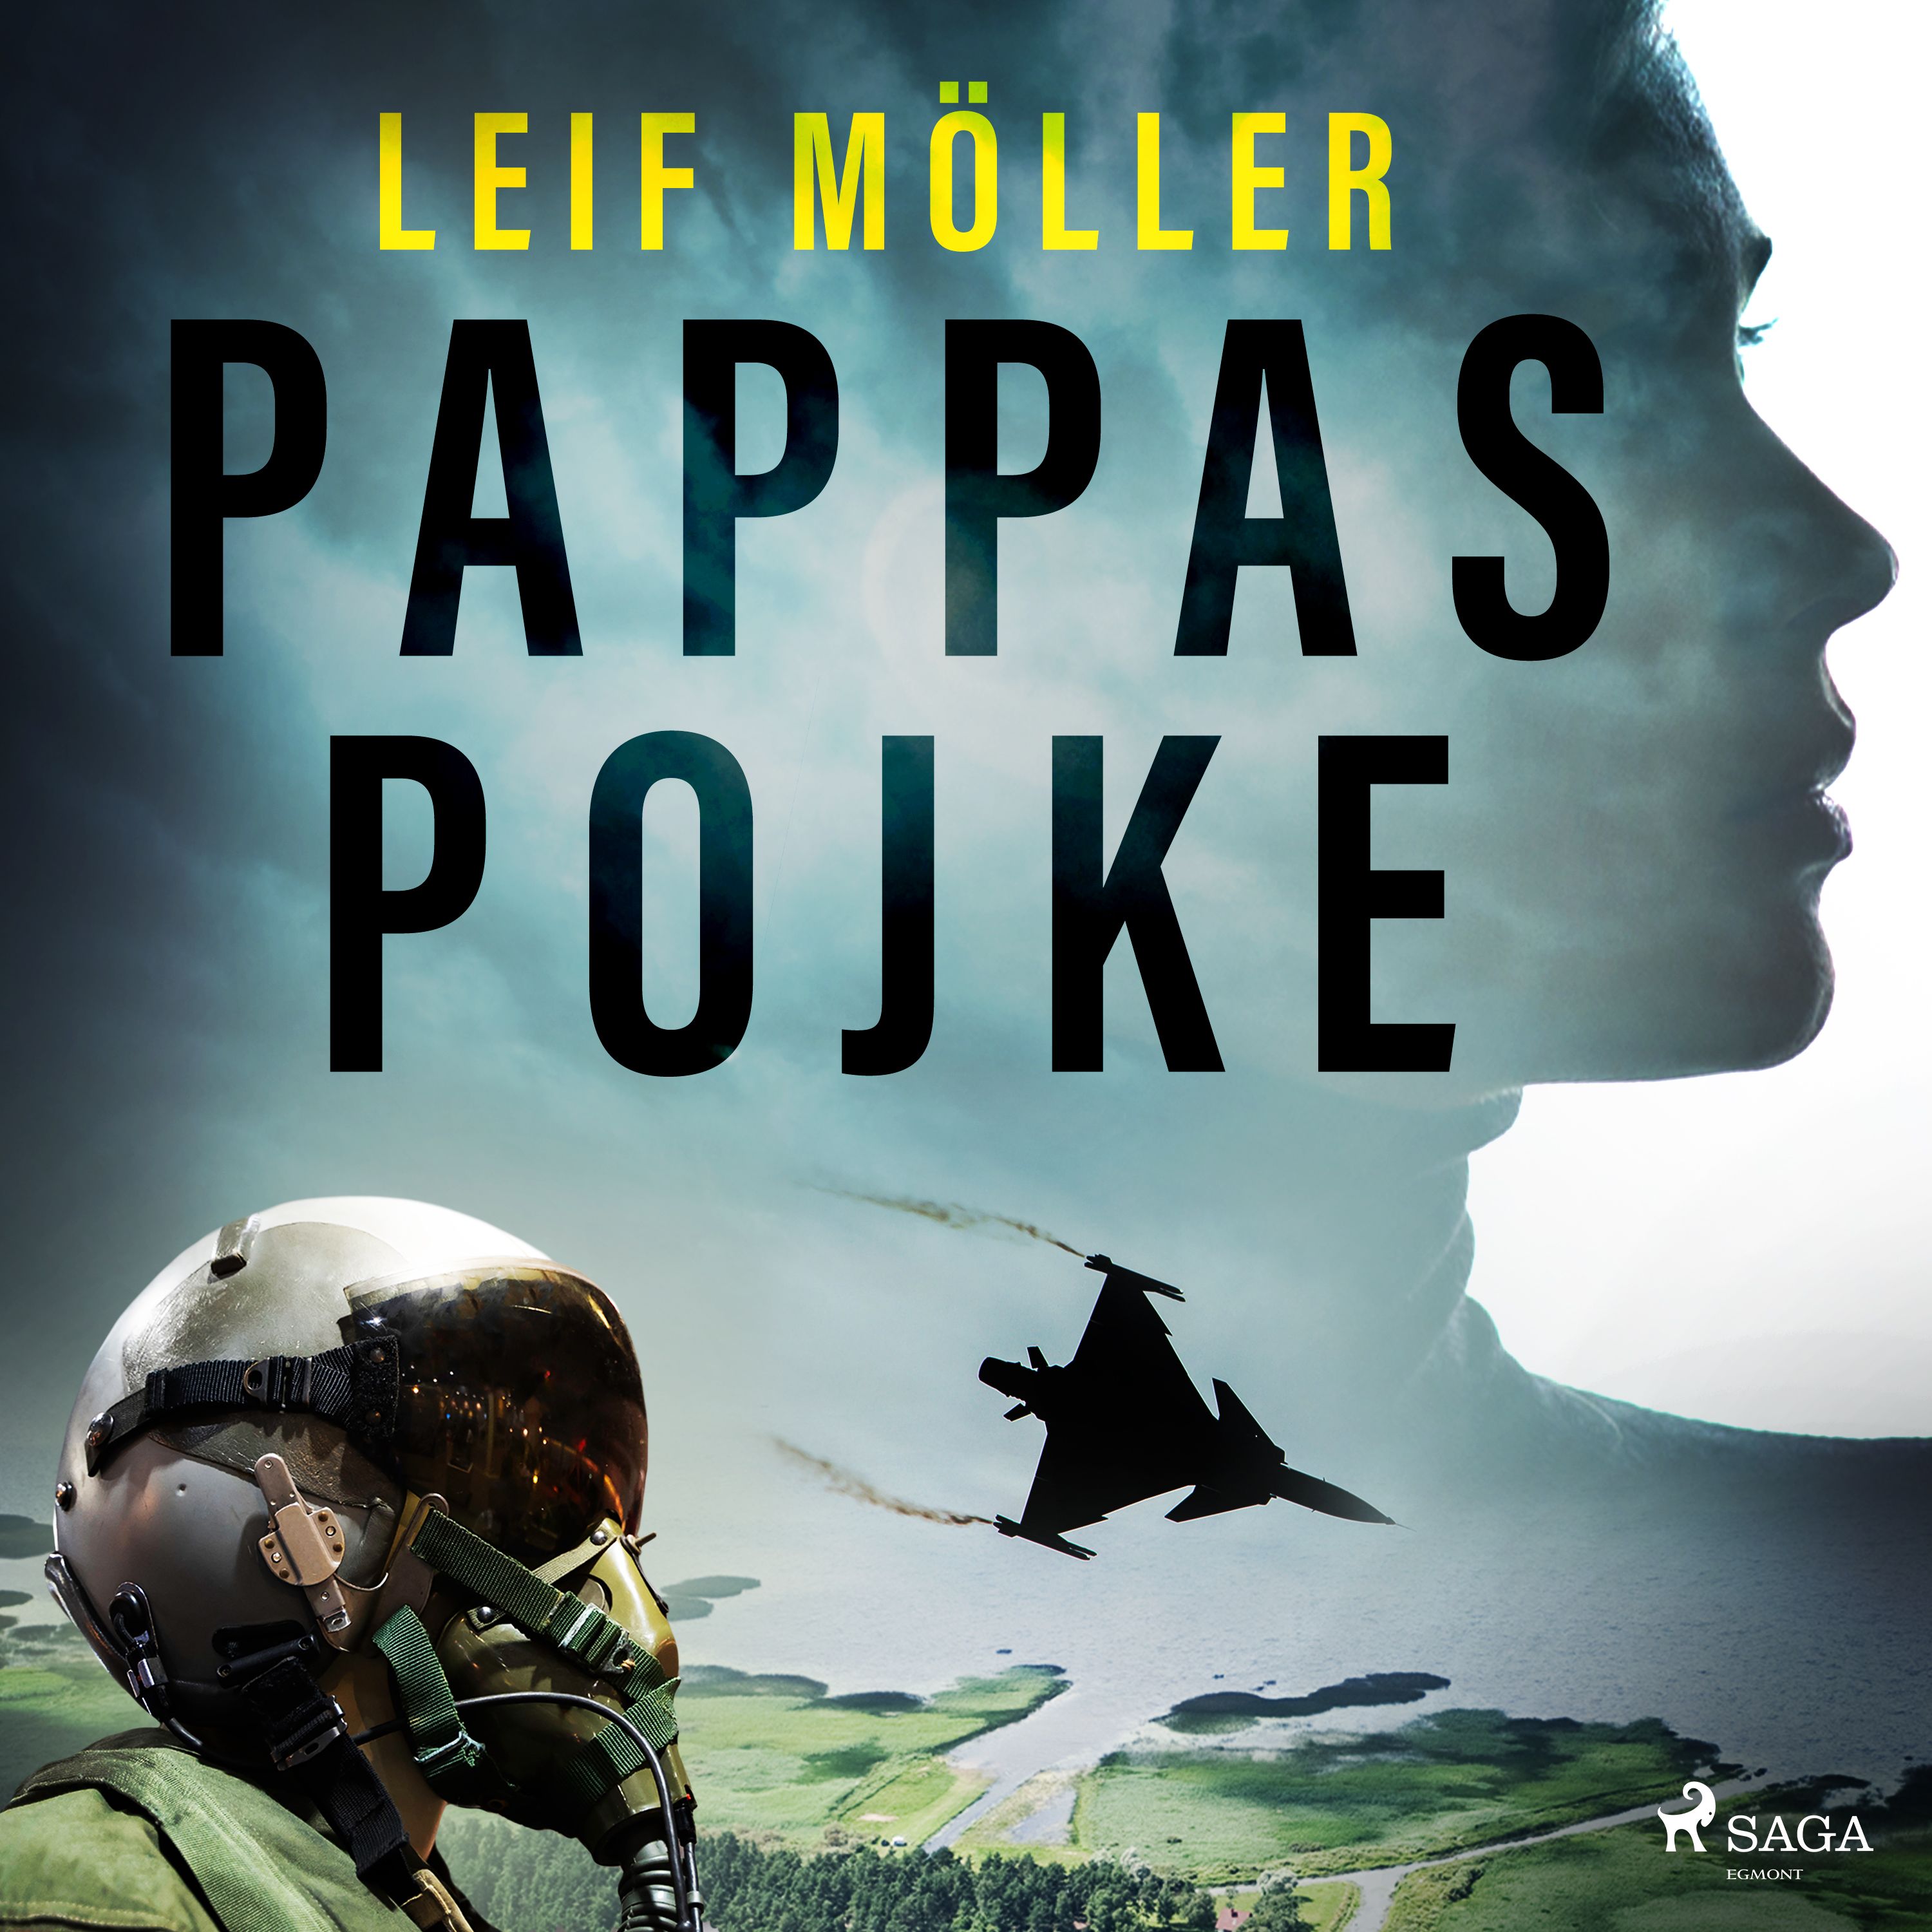 Pappas pojke, audiobook by Leif Möller